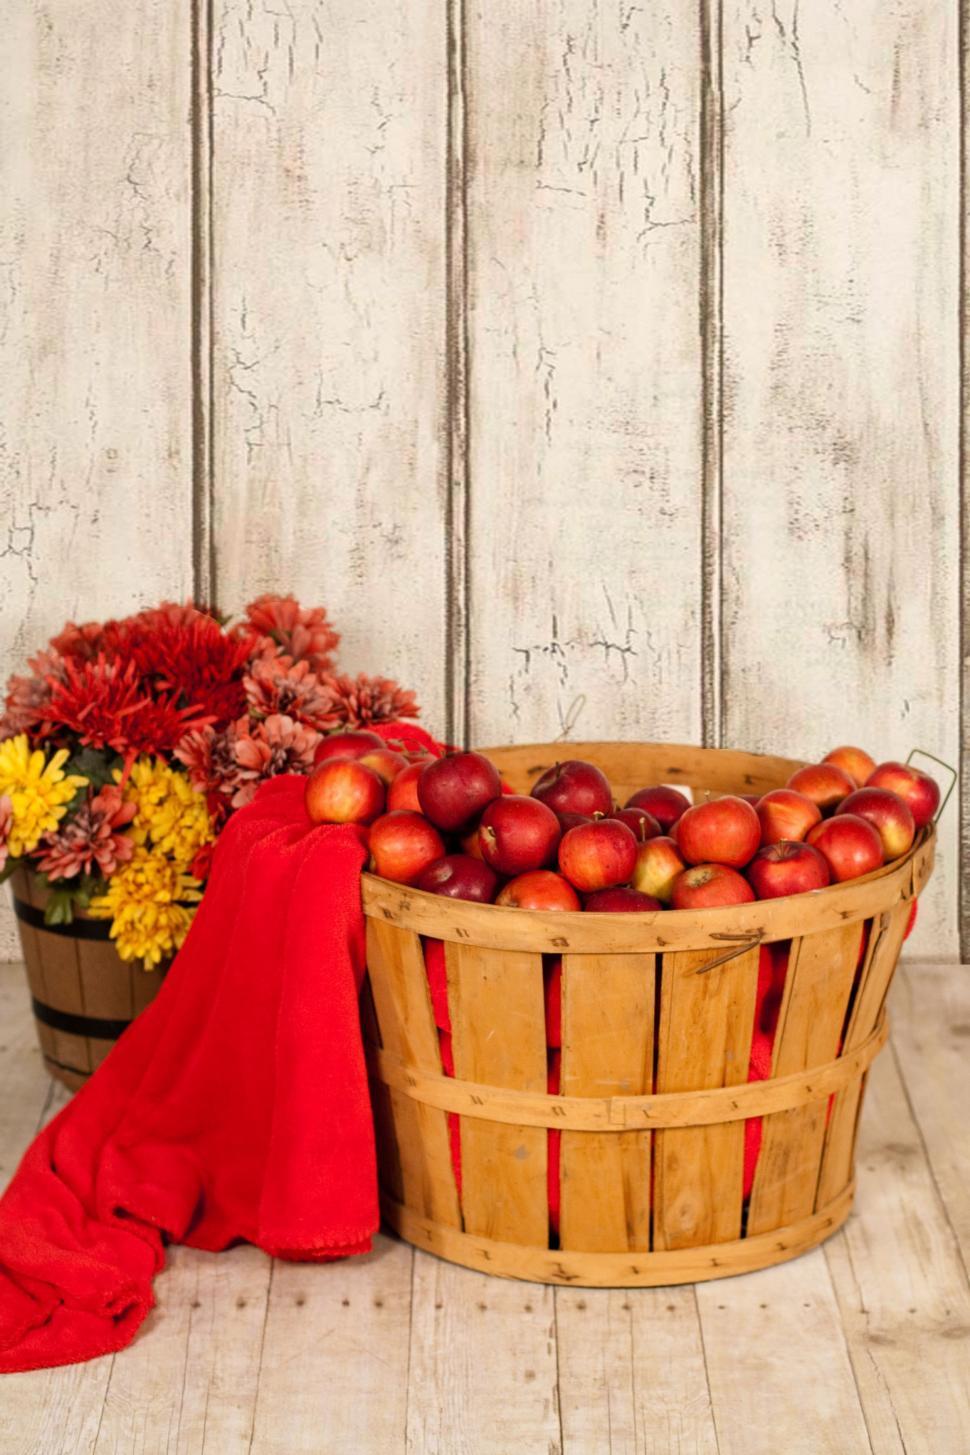 Free Image of Apples in Basket  